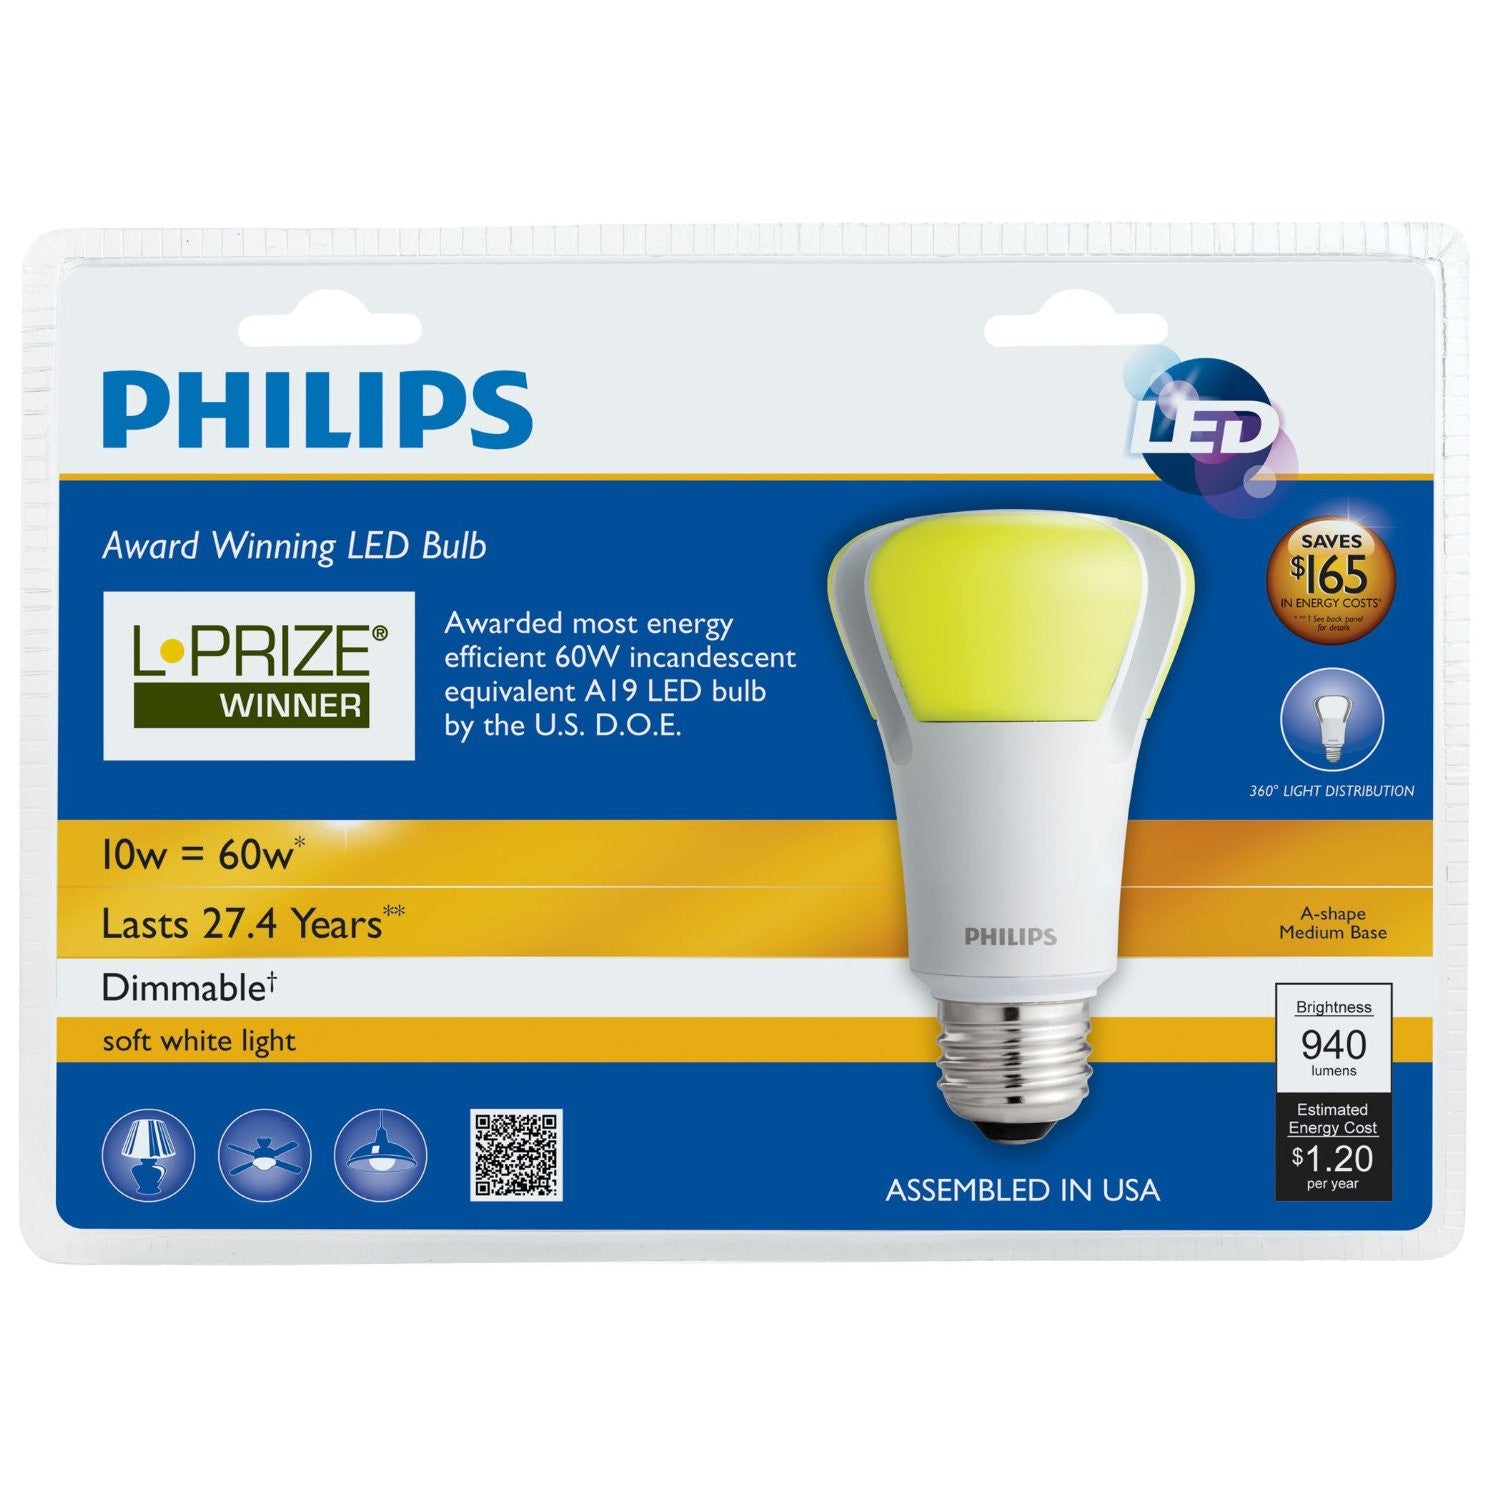 PHILIPS Endura LED 10W A19 Dimmable Bulb L-PRIZE Winner – BulbAmerica